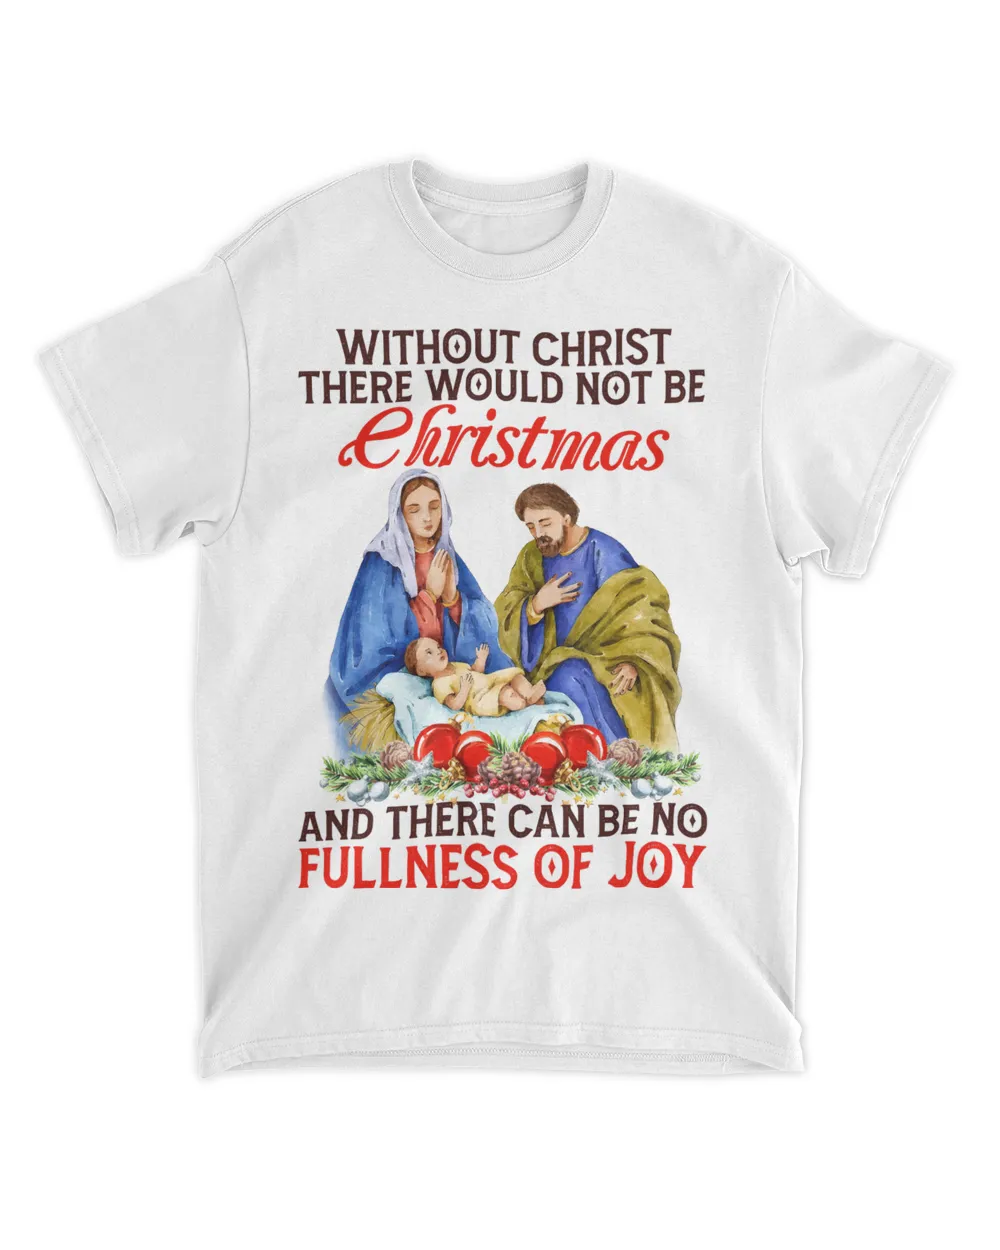 Jesus Fullness Of Joy